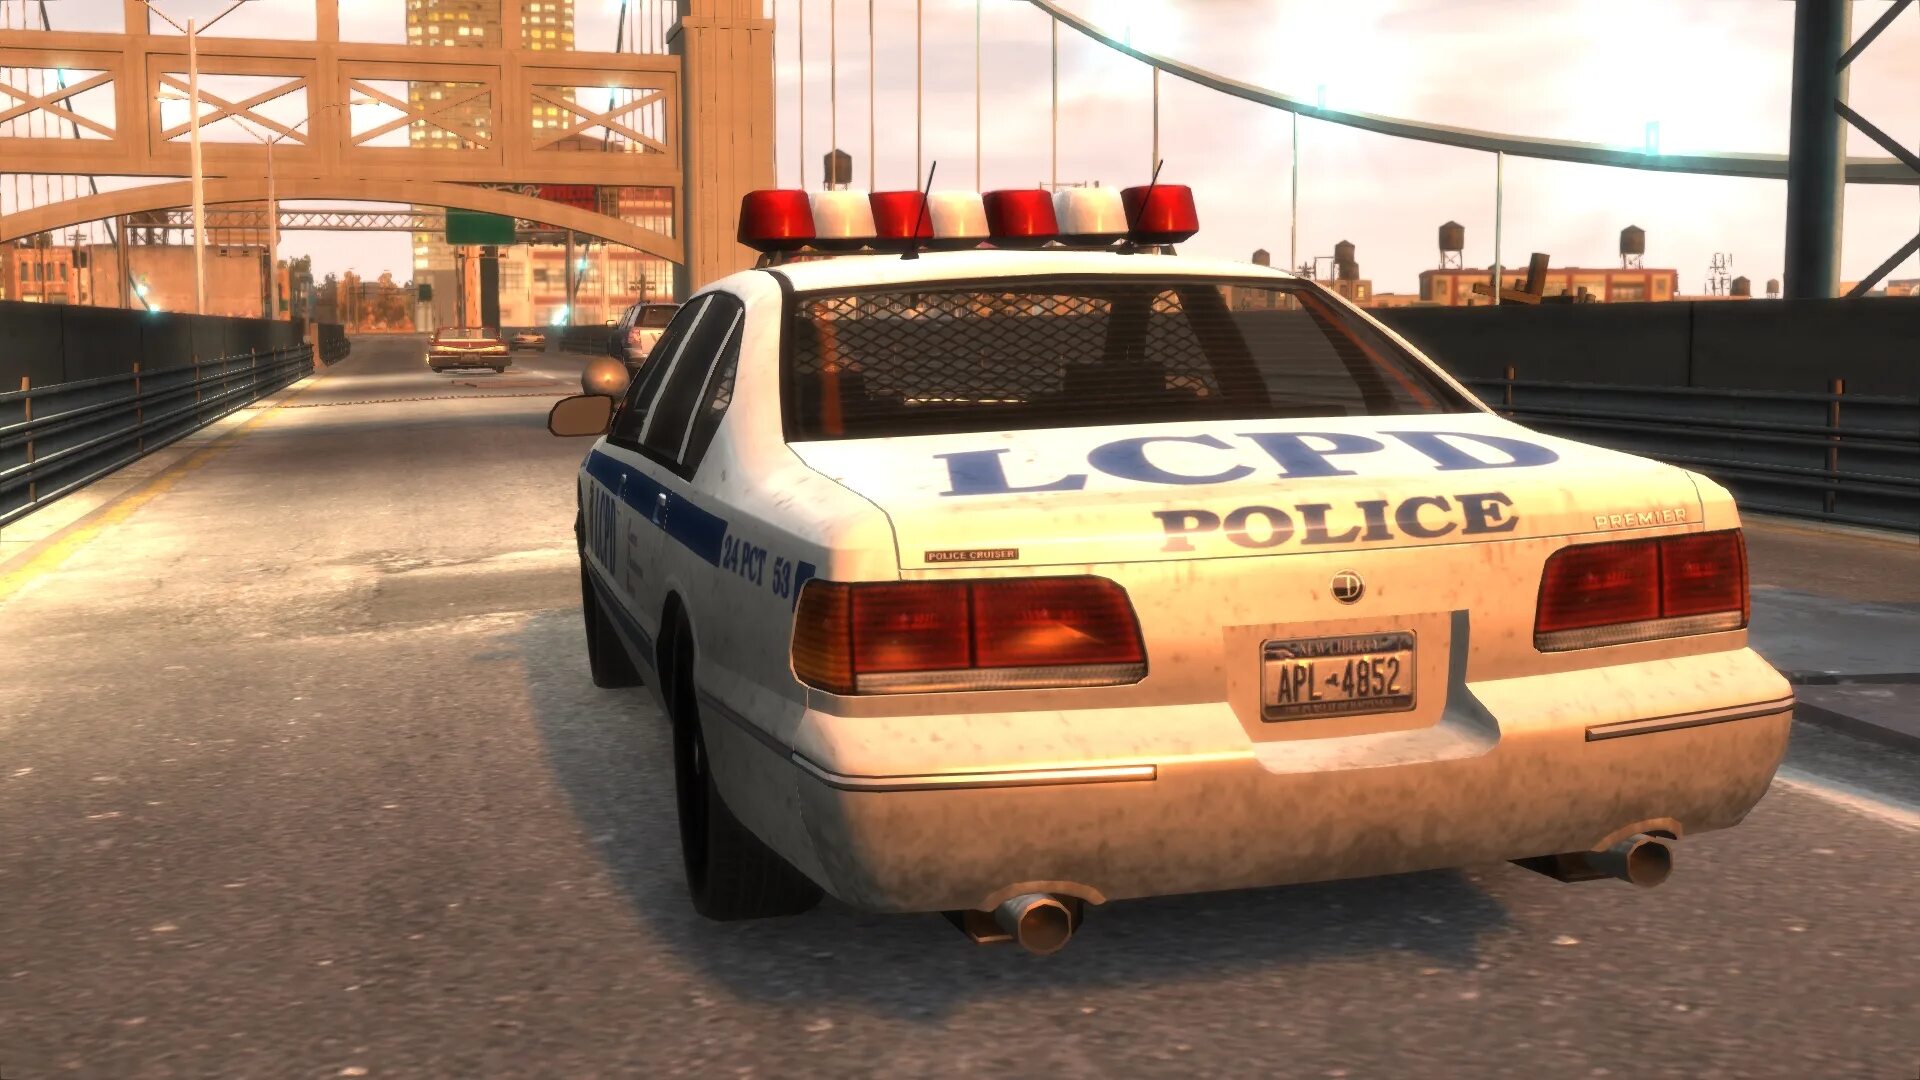 Declasse Premier Police Cruiser v1.2. ГТА 4 машина полиция ГТА. GTA 4 Police. ГТА 4 полиция. Полицейские машины в гта 4